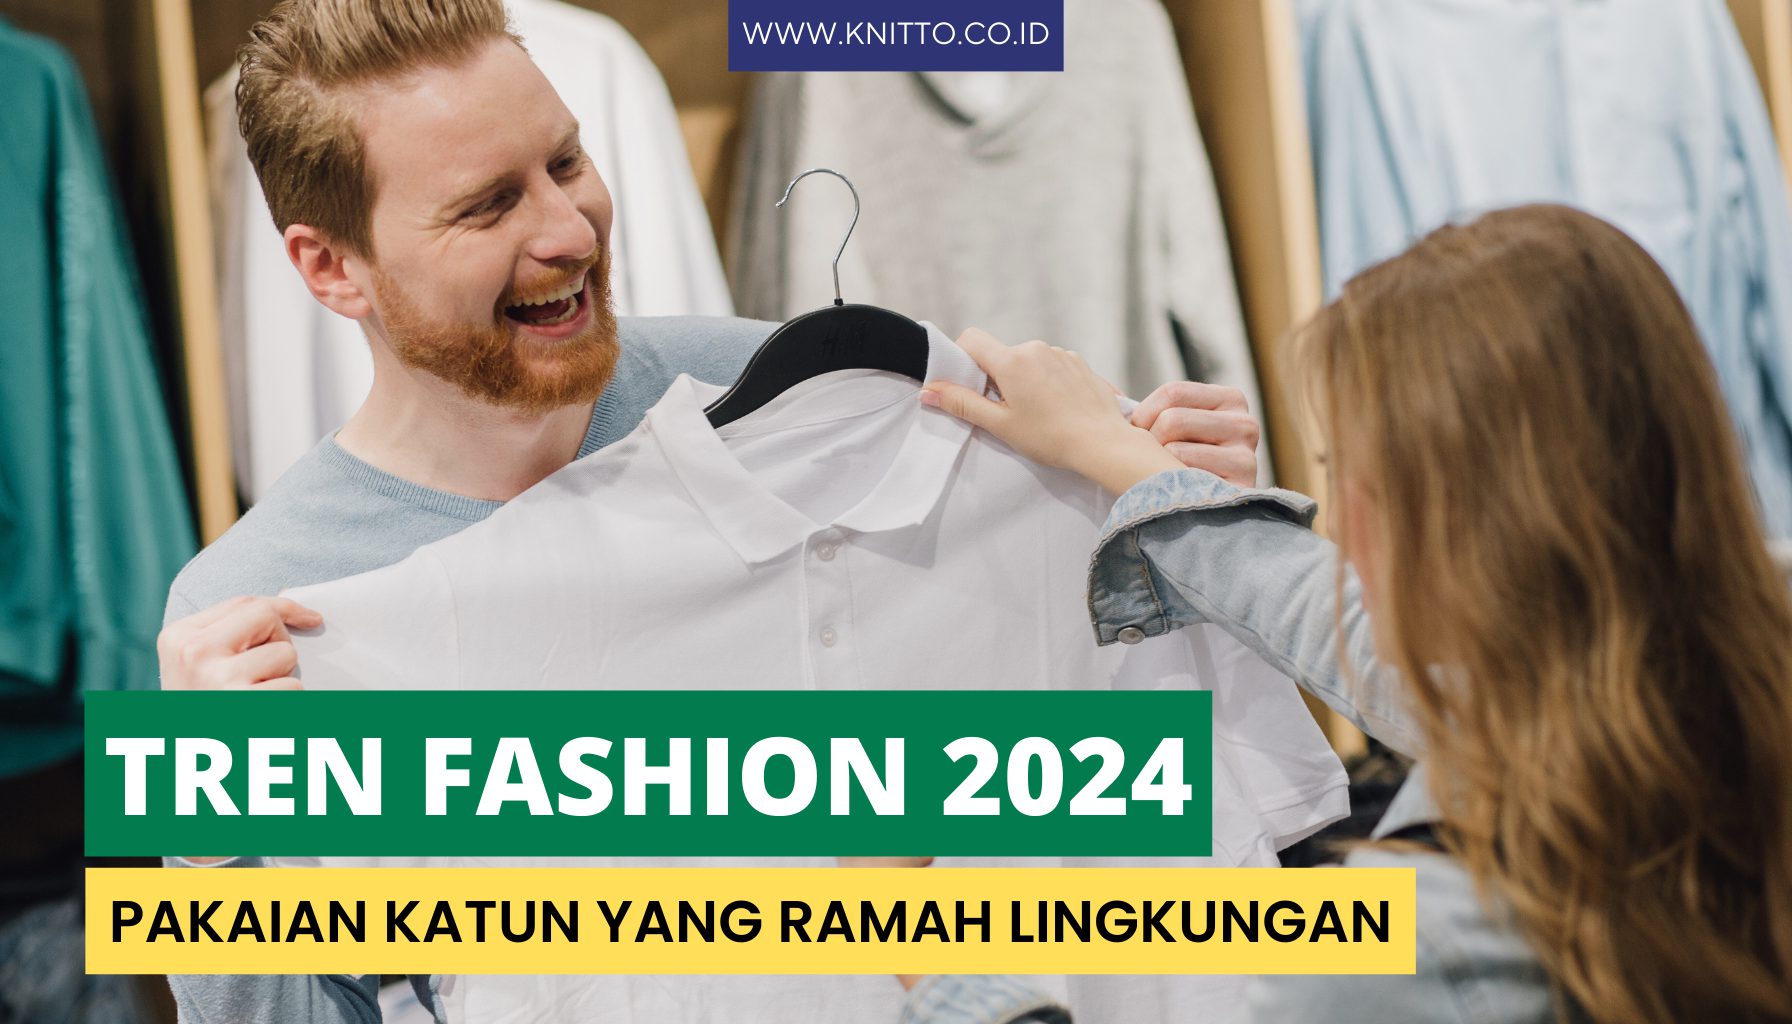 Mengintip Perkembangan Pakaian Katun di 2024, Pilihan Fashionable yang Sustainable